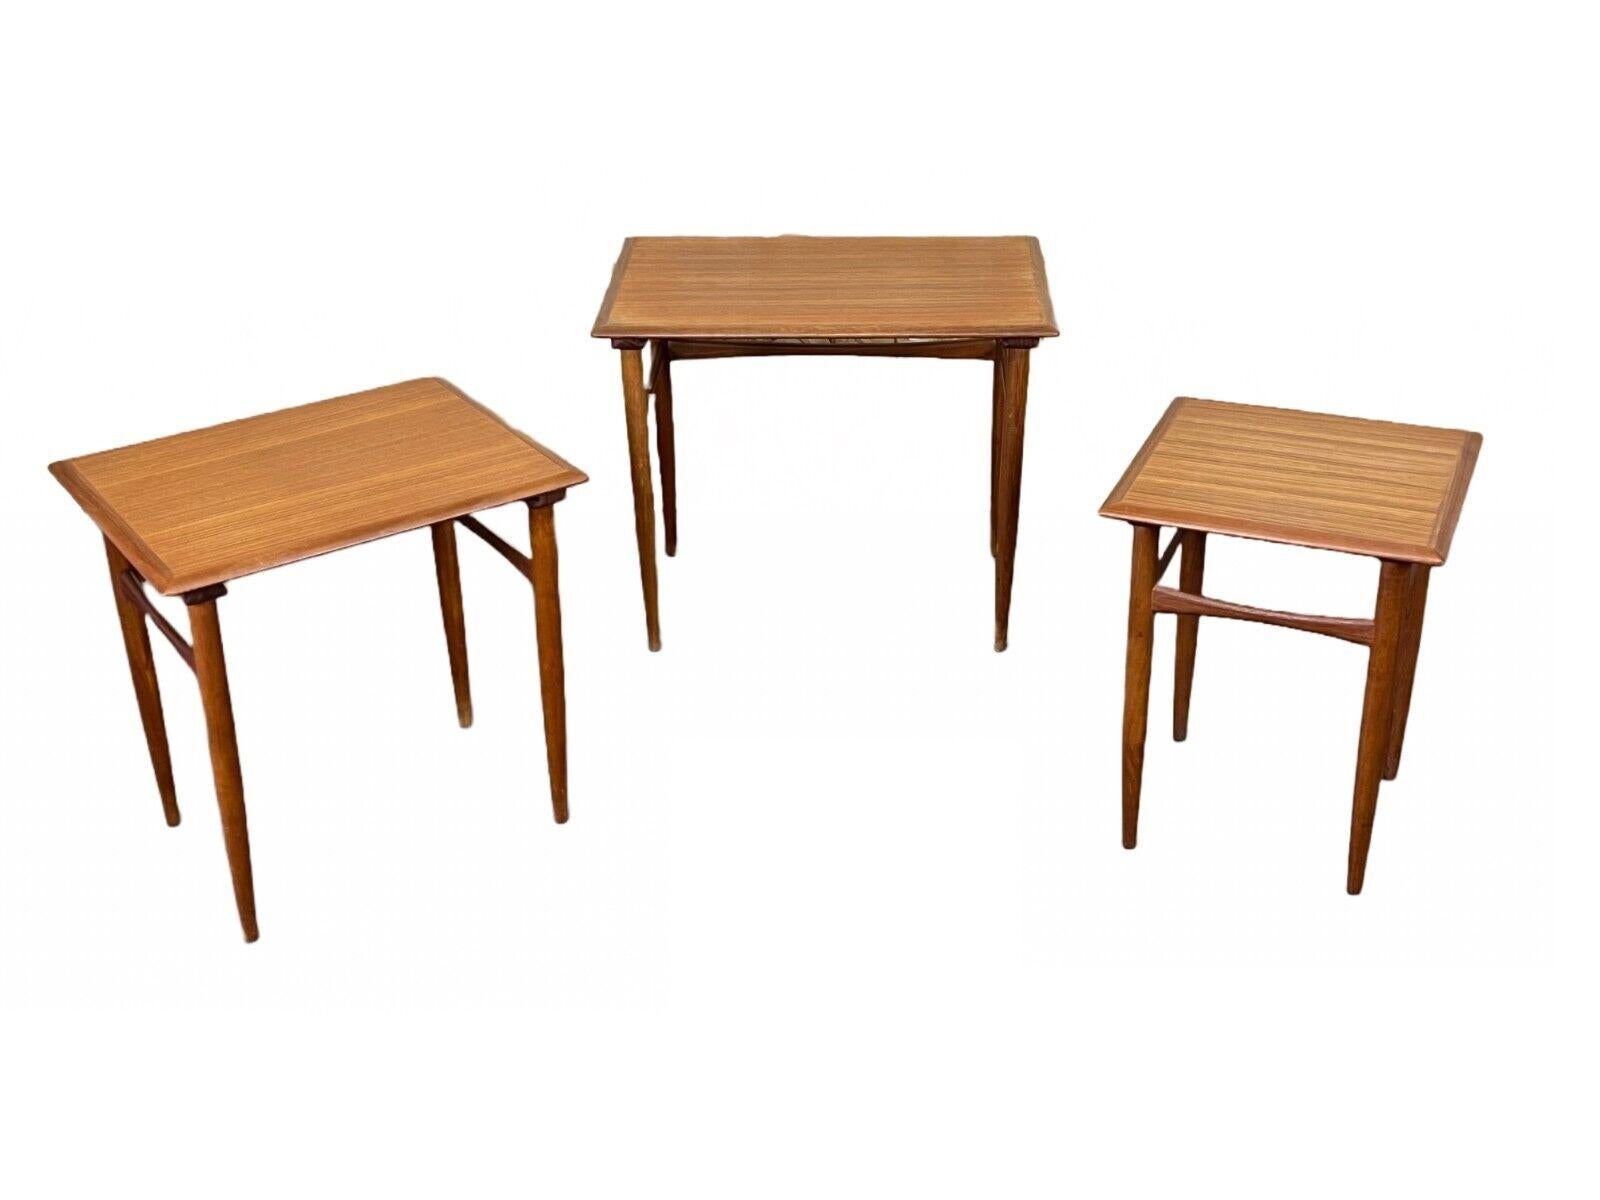 1960s 1970s teak nesting tables Kai Kristiansen Skovmand & Andersen Design

Object: side tables

Manufacturer: Skovmand & Andersen

Condition: good - vintage

Age: around 1960-1970

Dimensions:

Width = 58.5cm
Depth = 40cm
Height =